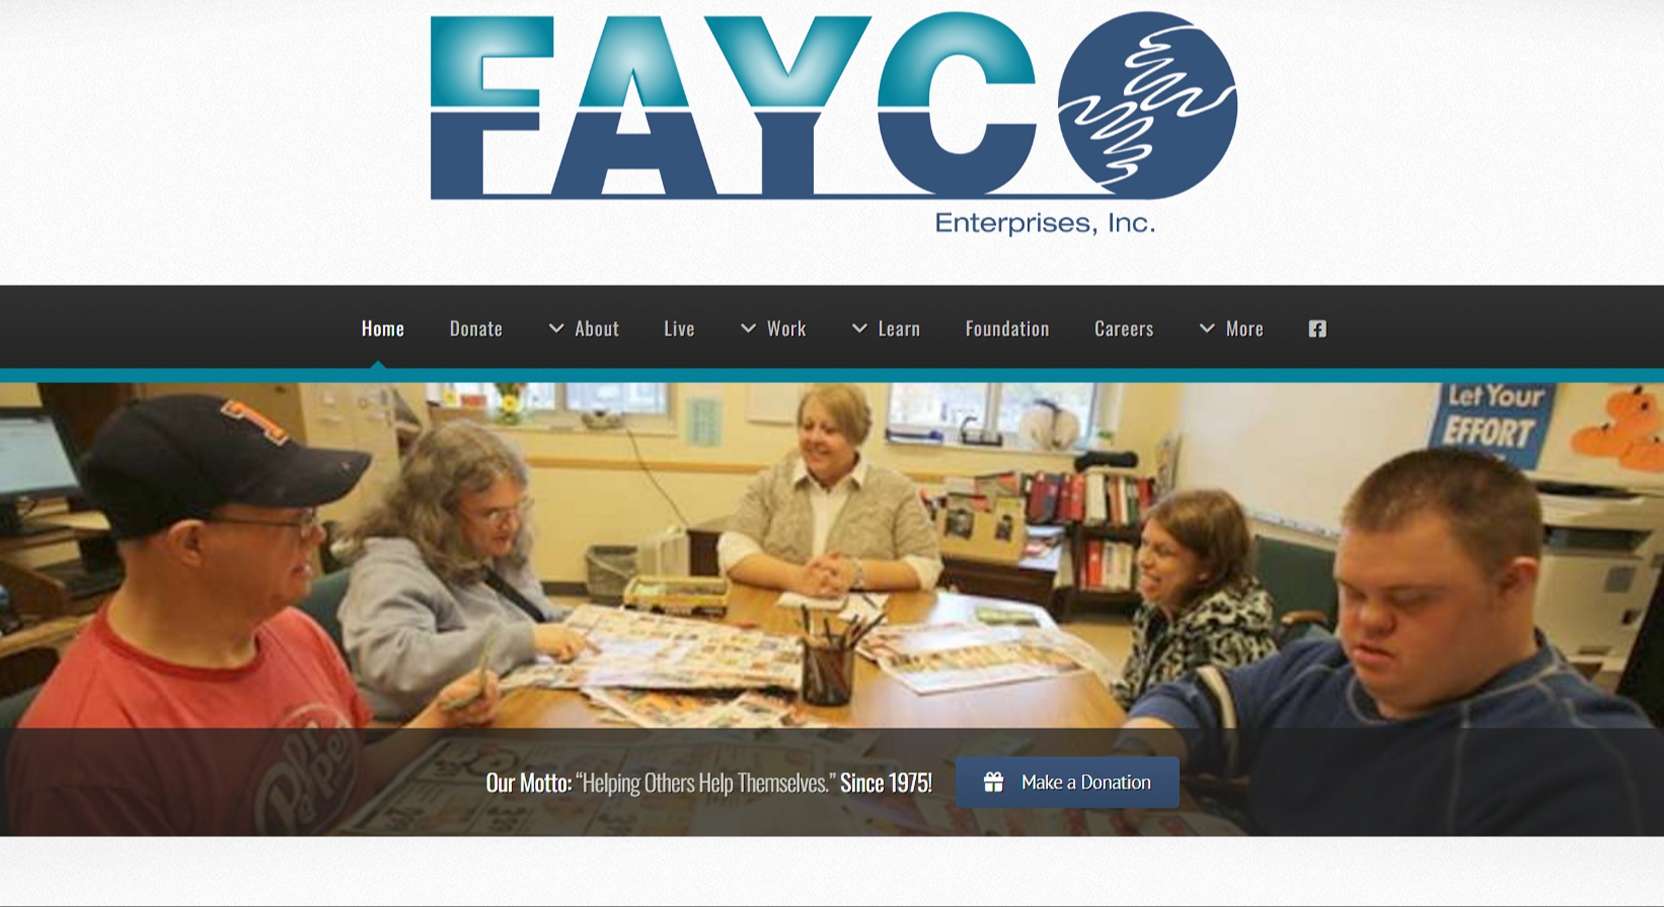 Fayco website homepage screenshot